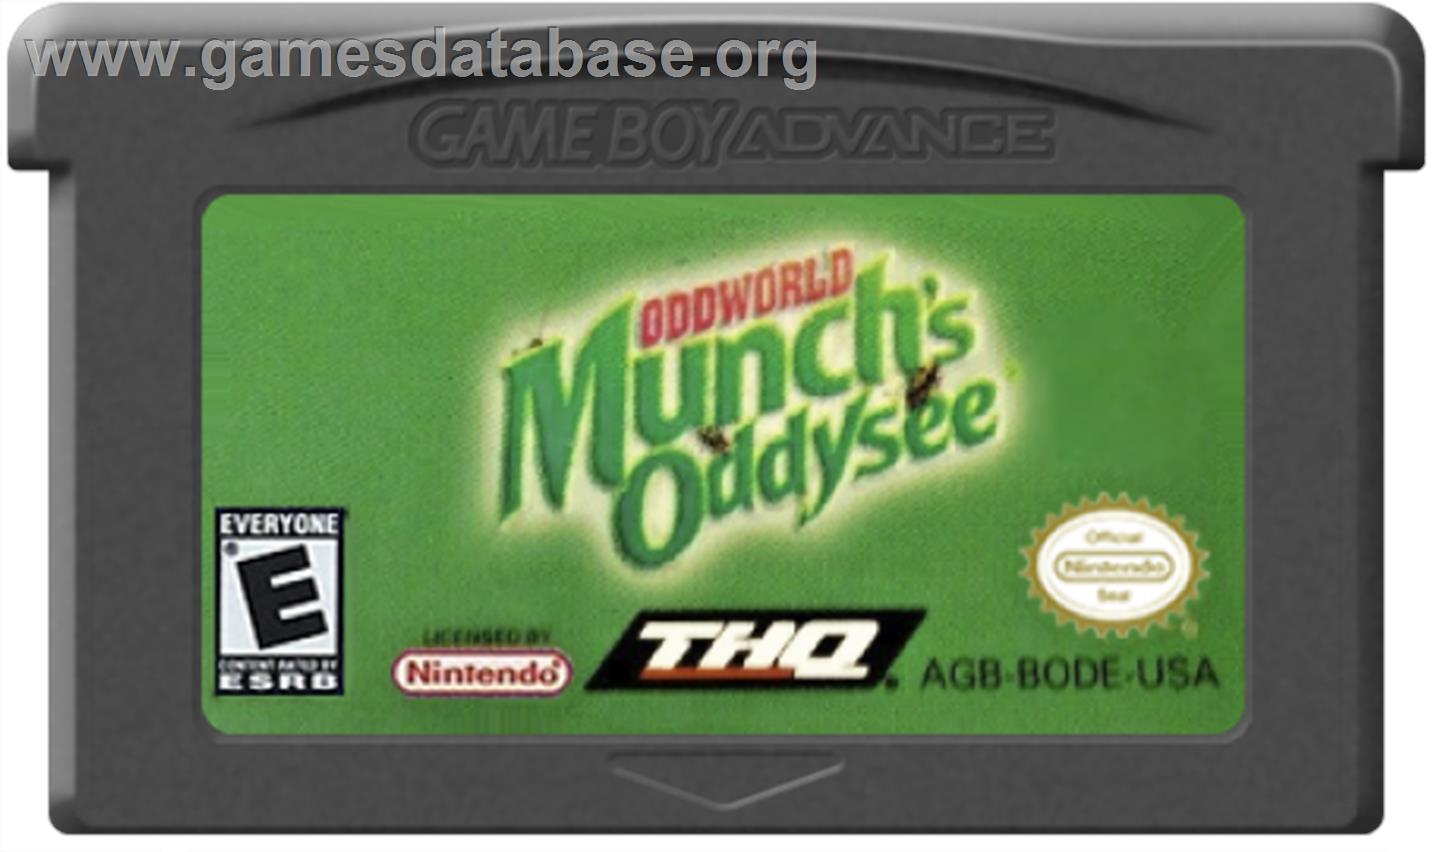 Oddworld: Munch's Oddysee - Nintendo Game Boy Advance - Artwork - Cartridge